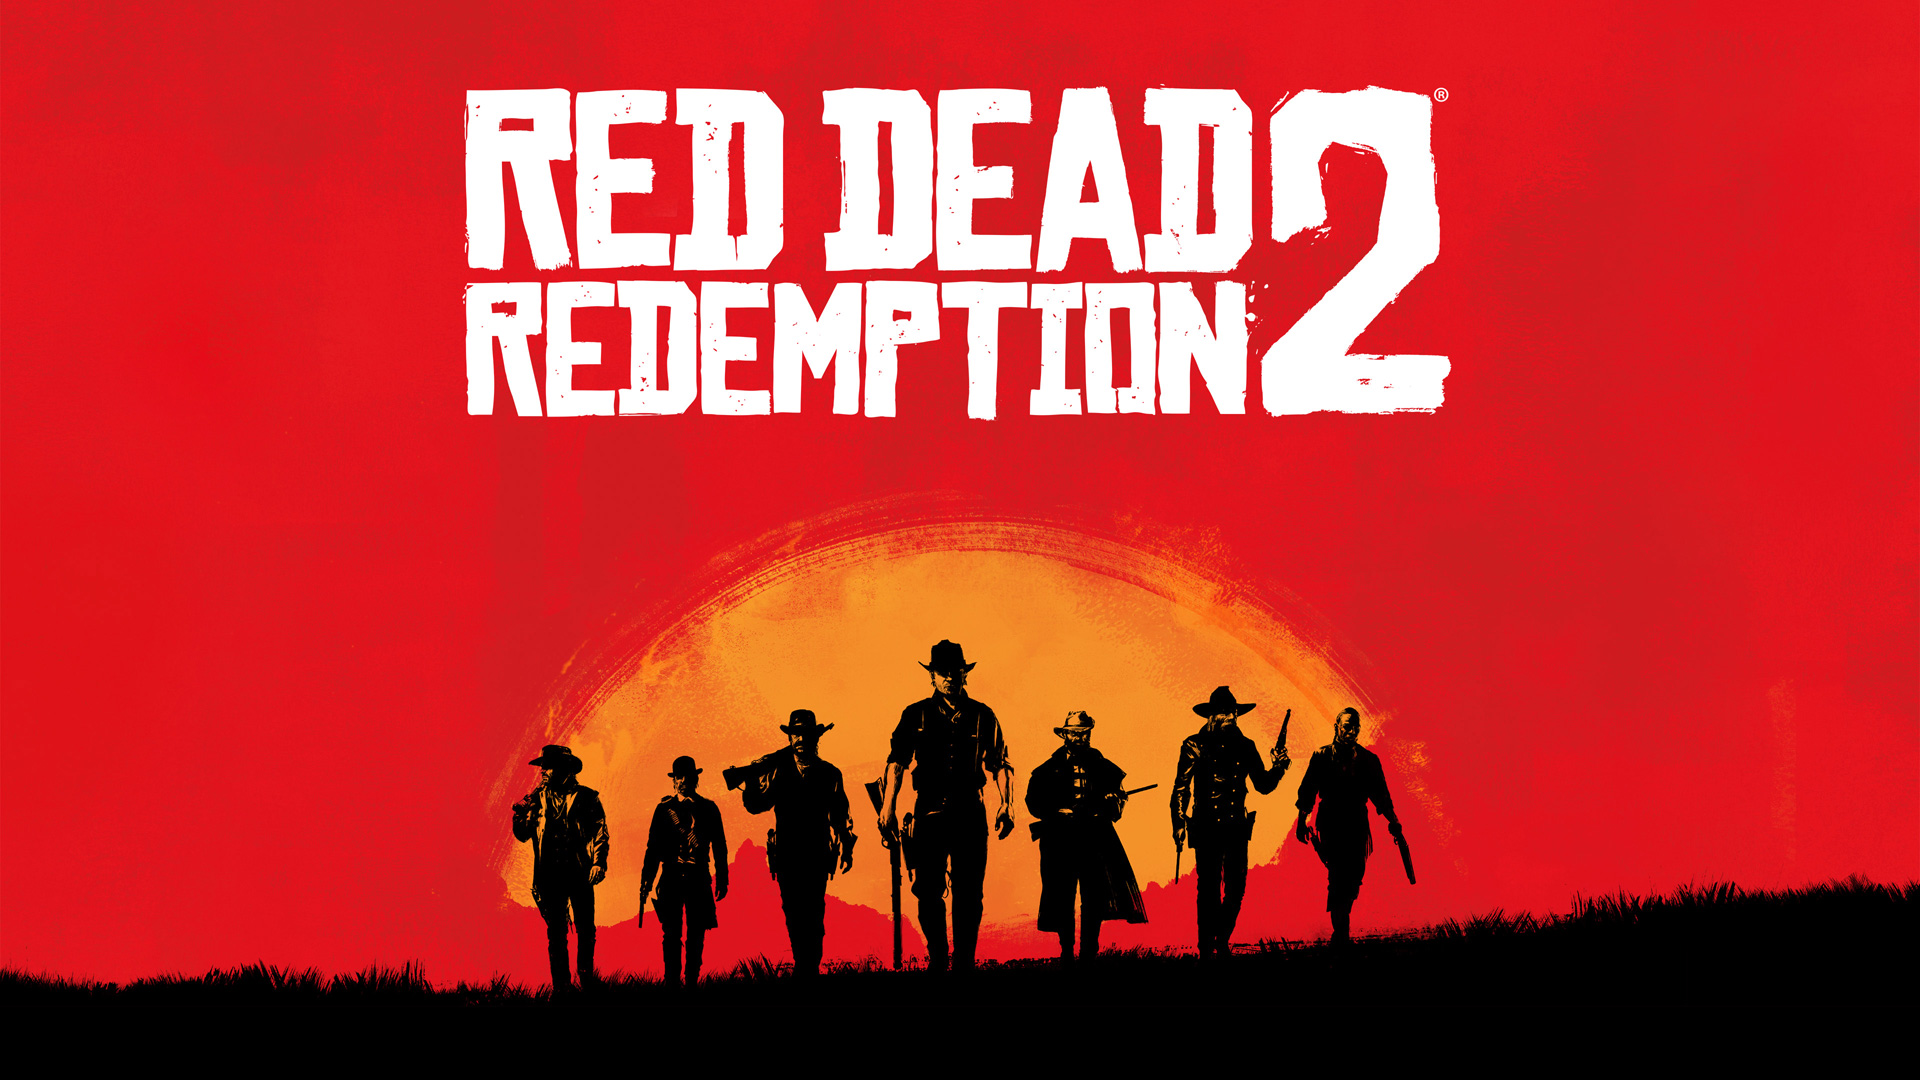 Red Dead Redemption 2 art